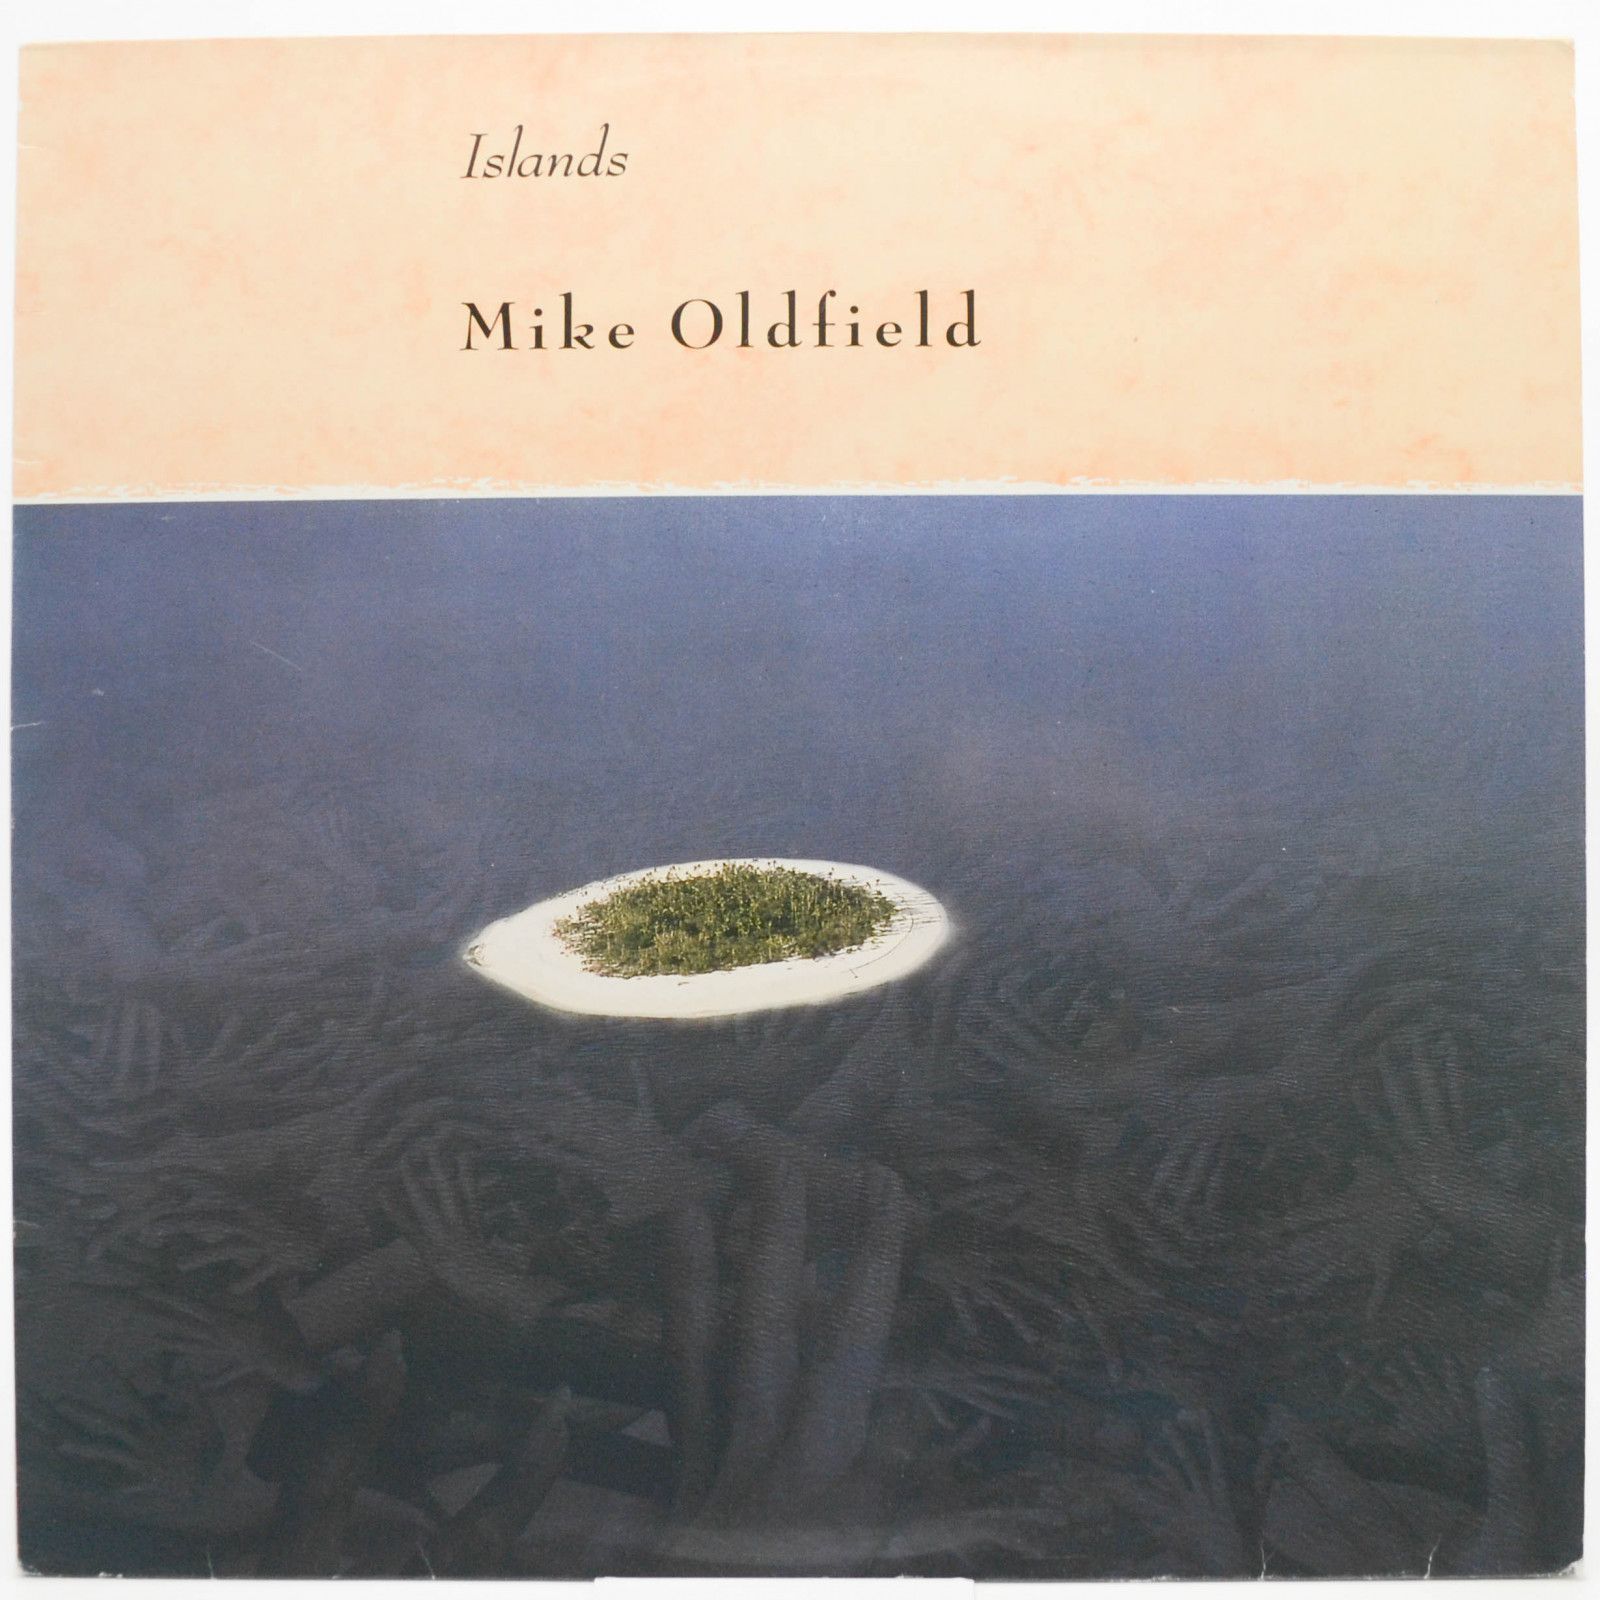 Mike Oldfield — Islands, 1987